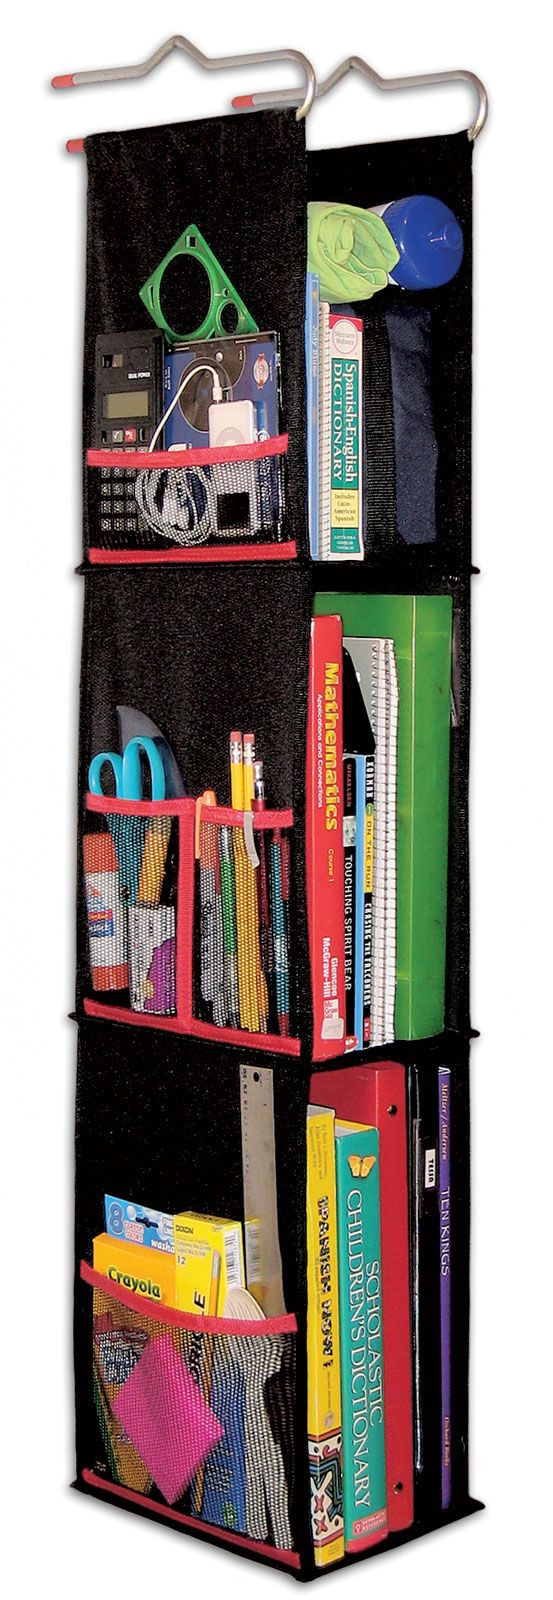 Best ideas about DIY Locker Organizers
. Save or Pin Hanging Locker Organizer 3 Shelf Fabric by LockerWorks Now.